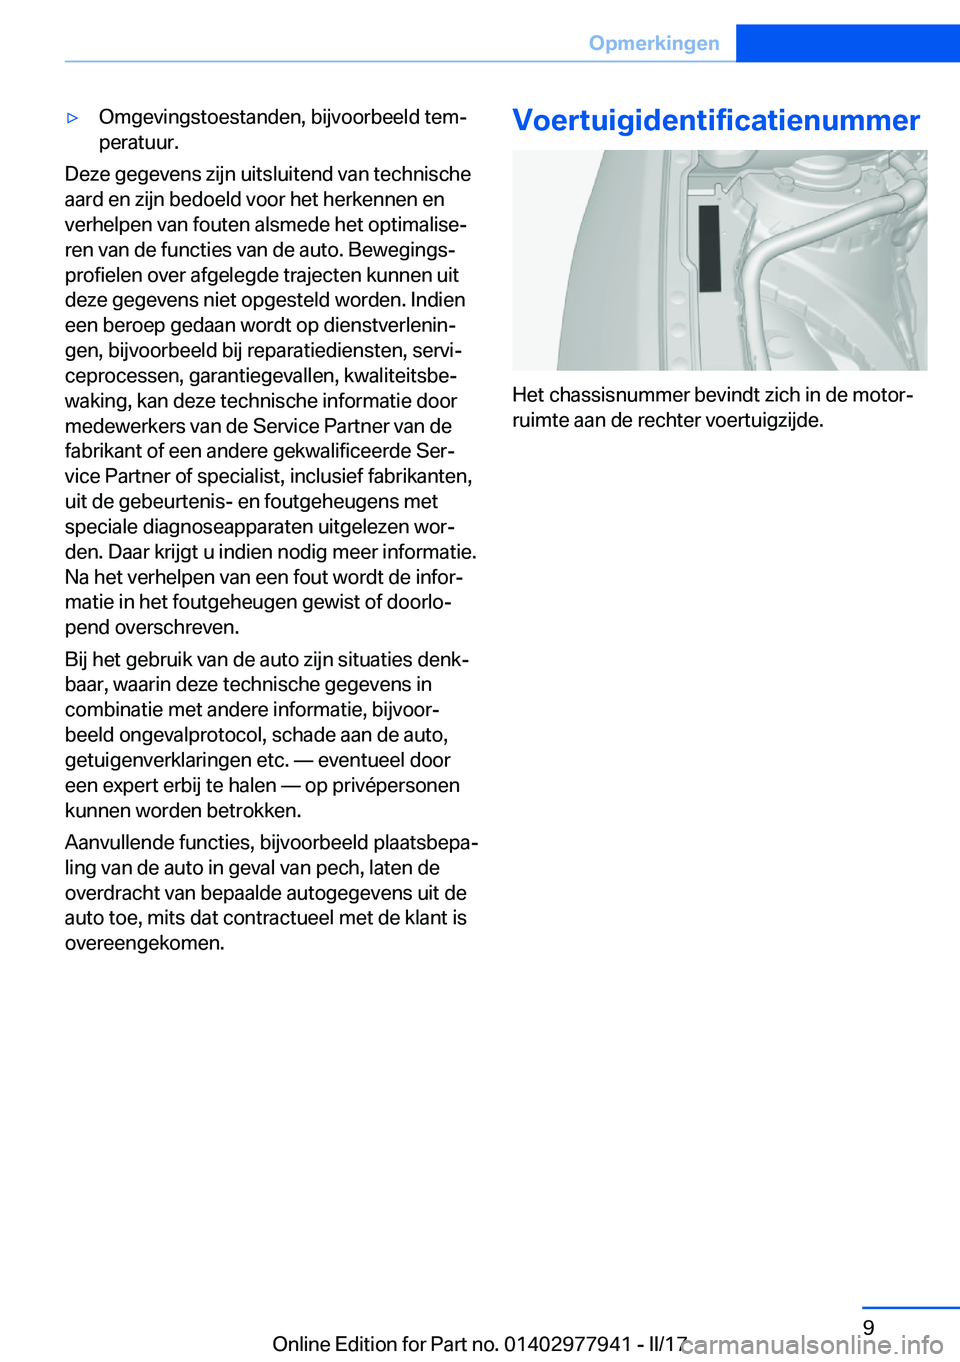 BMW 3 SERIES 2017  Instructieboekjes (in Dutch) 'y�O�m�g�e�v�i�n�g�s�t�o�e�s�t�a�n�d�e�n�,� �b�i�j�v�o�o�r�b�e�e�l�d� �t�e�mj�p�e�r�a�t�u�u�r�.
�D�e�z�e� �g�e�g�e�v�e�n�s� �z�i�j�n� �u�i�t�s�l�u�i�t�e�n�d� �v�a�n� �t�e�c�h�n�i�s�c�h�e�a�a�r�d�